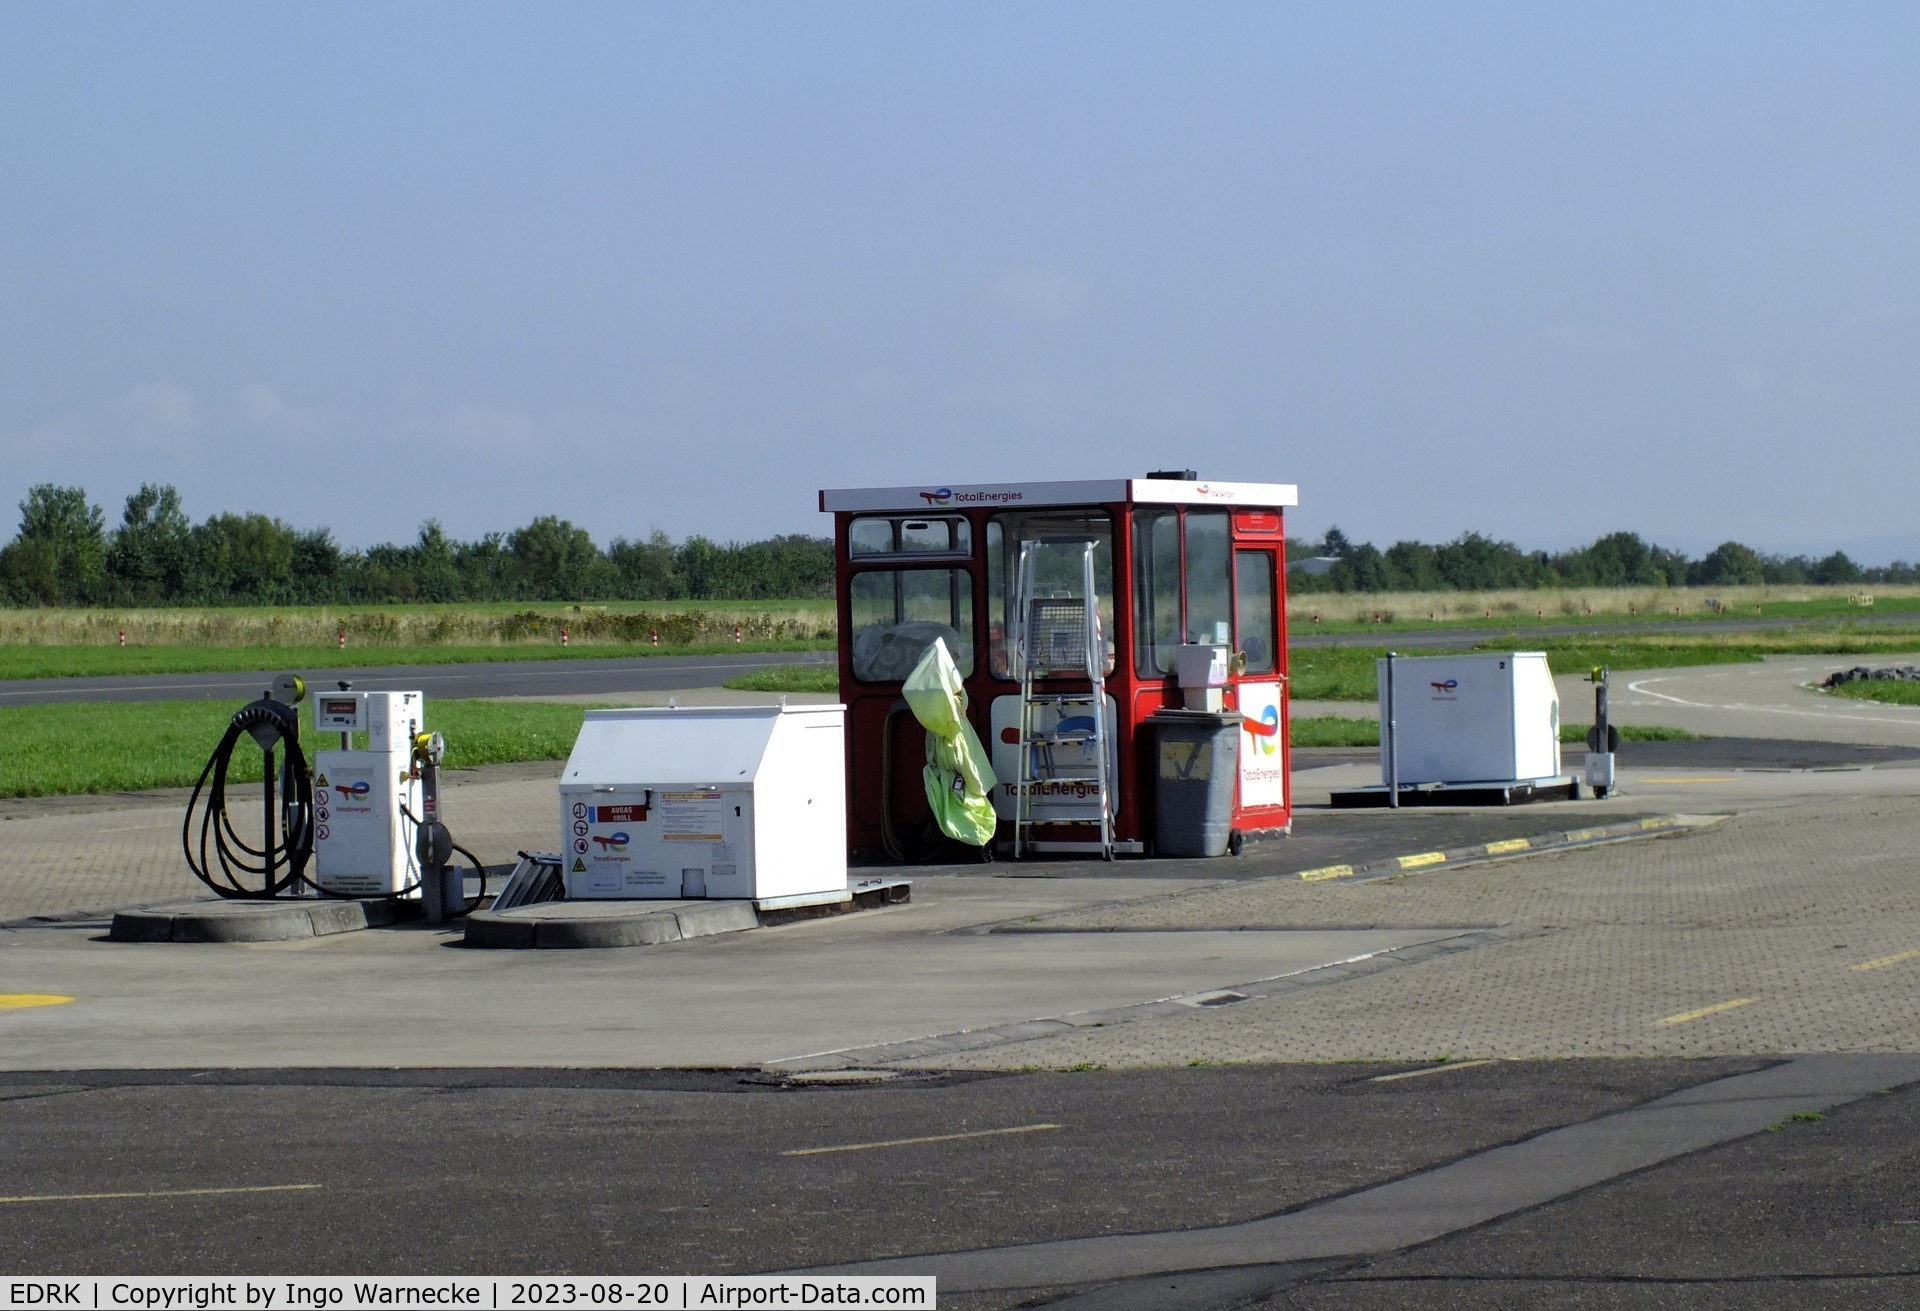 Koblenz Winningen Airport, Winningen, Mosel Germany (EDRK) - fuelling station at Koblenz-Winningen airfield